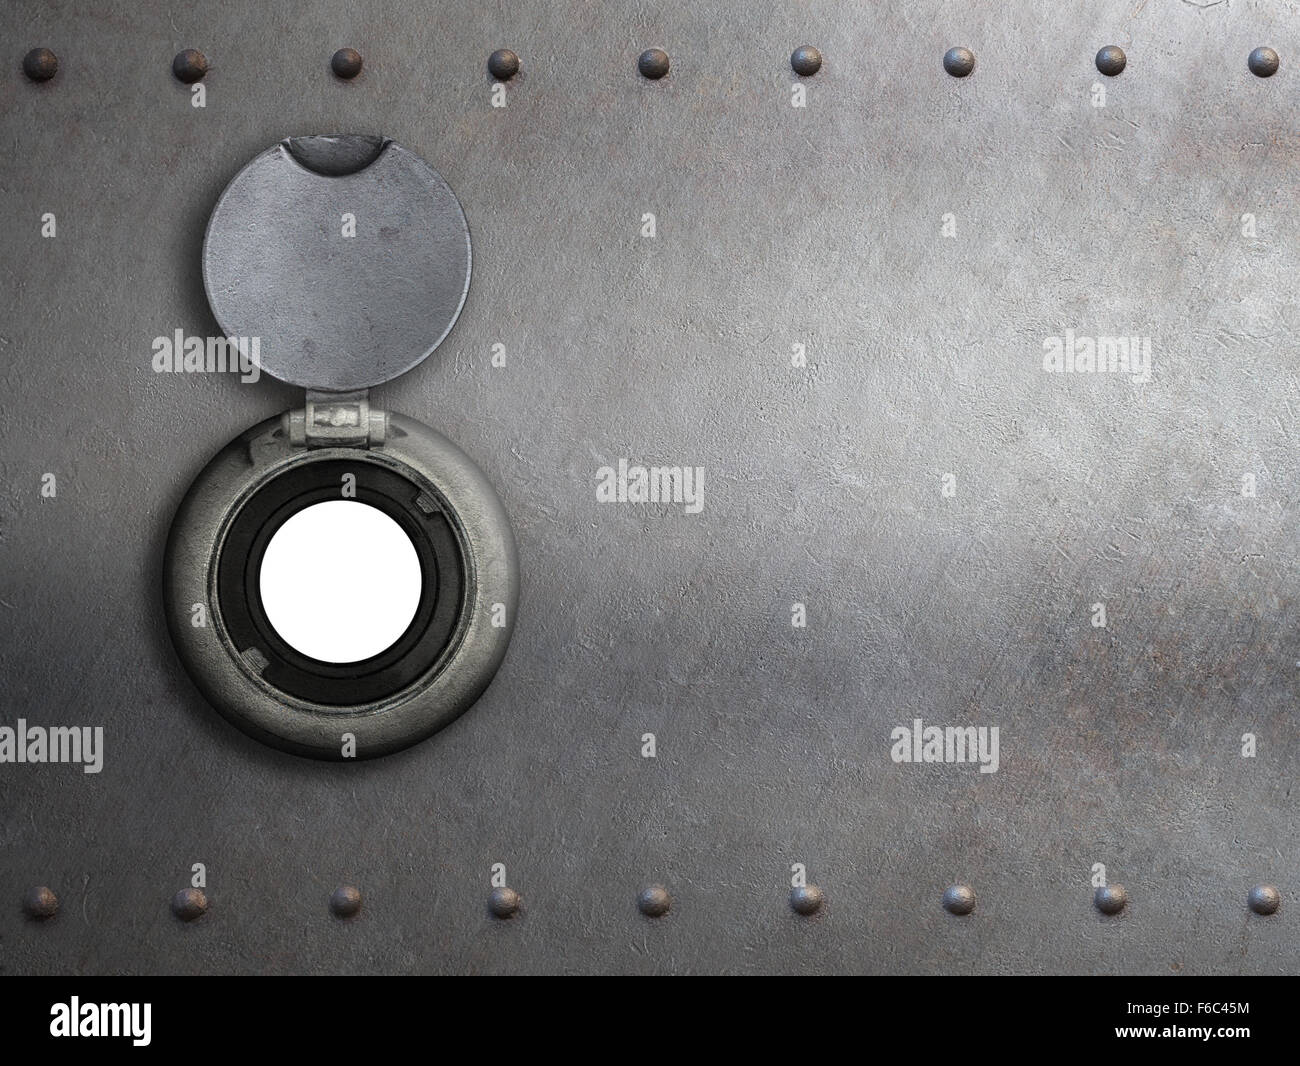 peephole on metal armored door Stock Photo